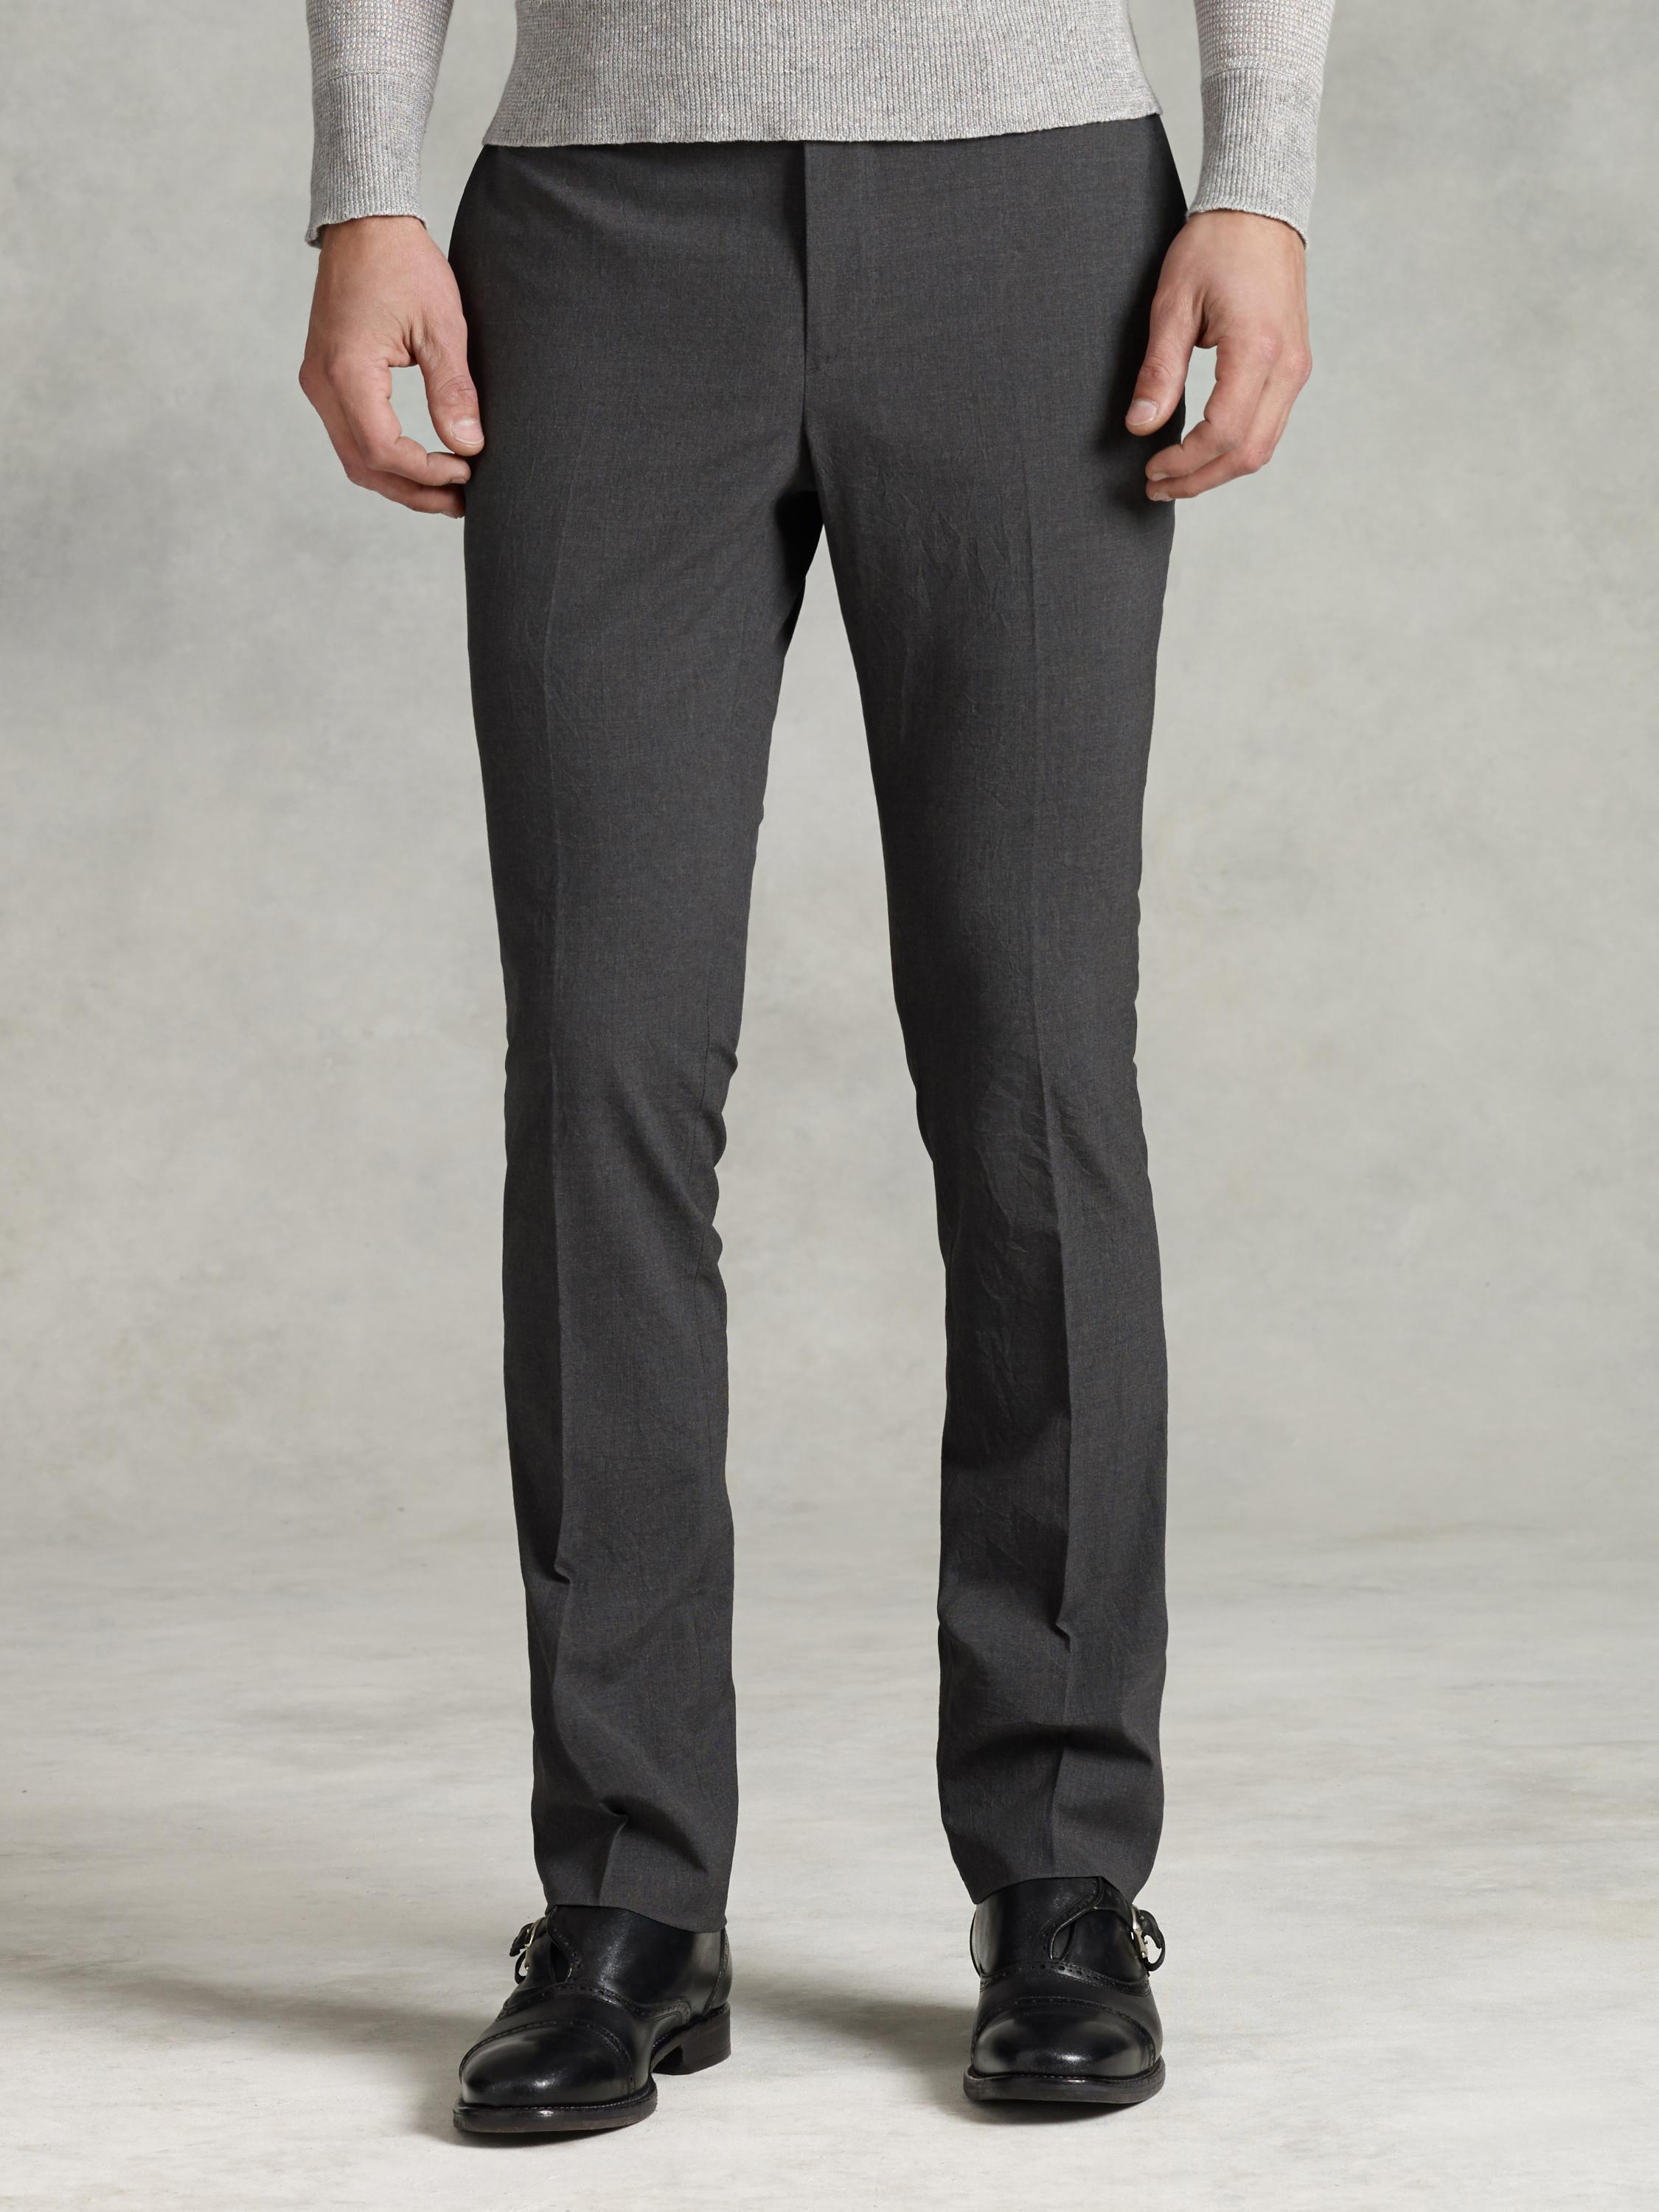 Men's Designer Pants - Casual, Dress, Cargos, Slim Fit, Wools, Cottons ...